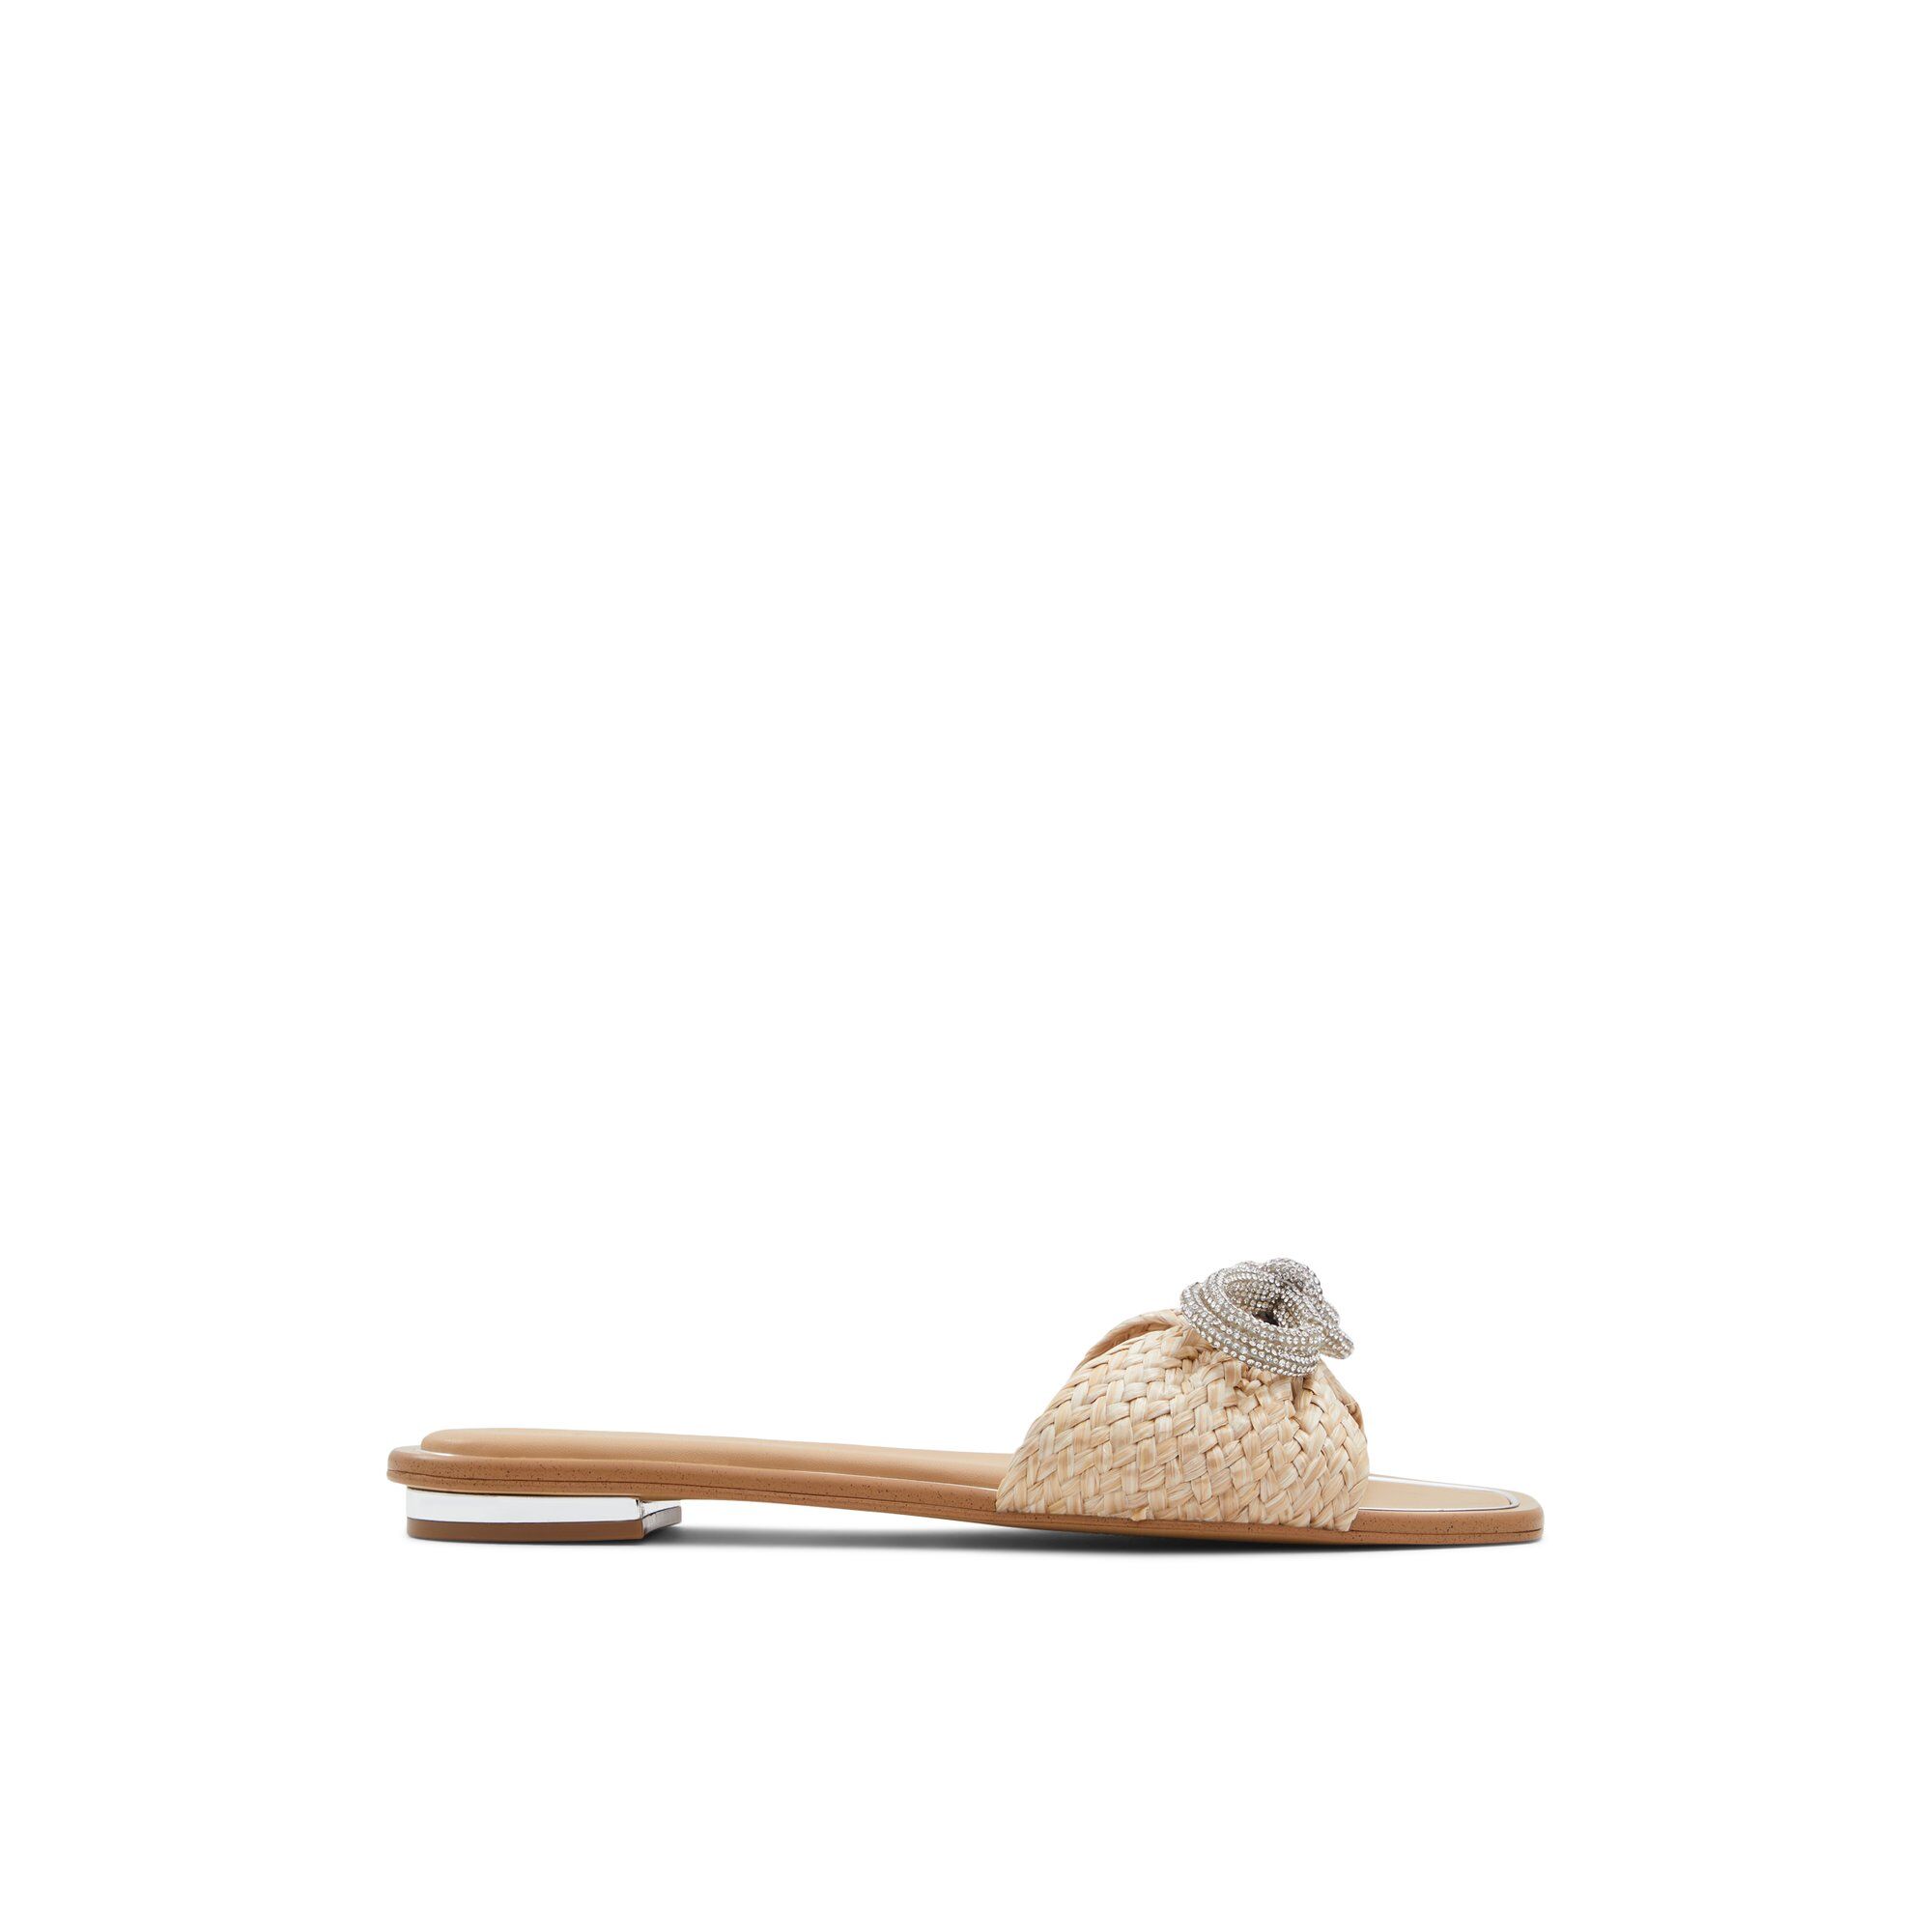 ALDO Acirarwen - Women's Sandal - Beige, Size 7.5